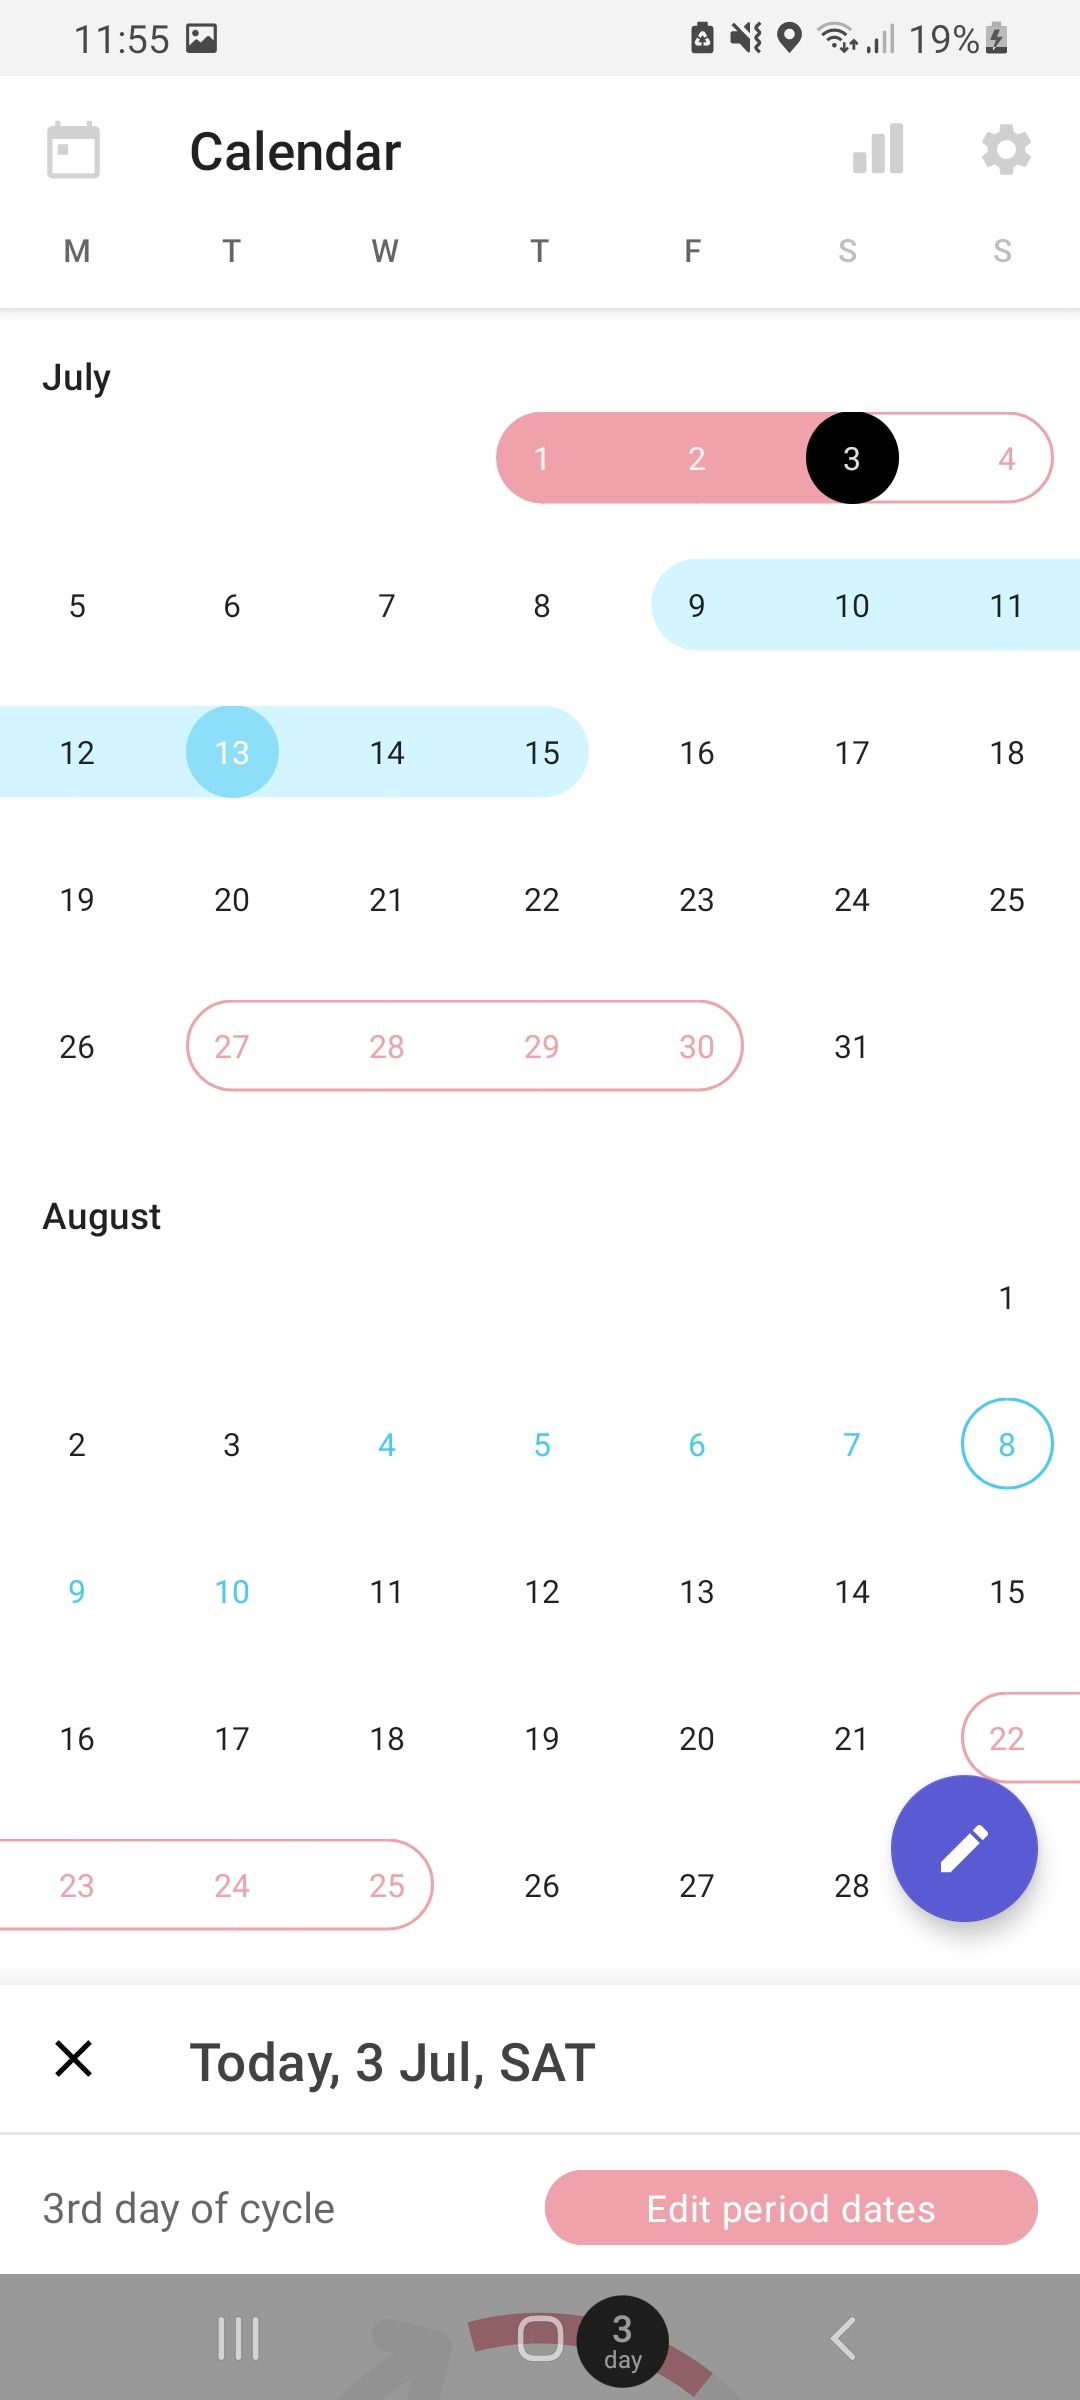 Clover free period tracking app calendar screen